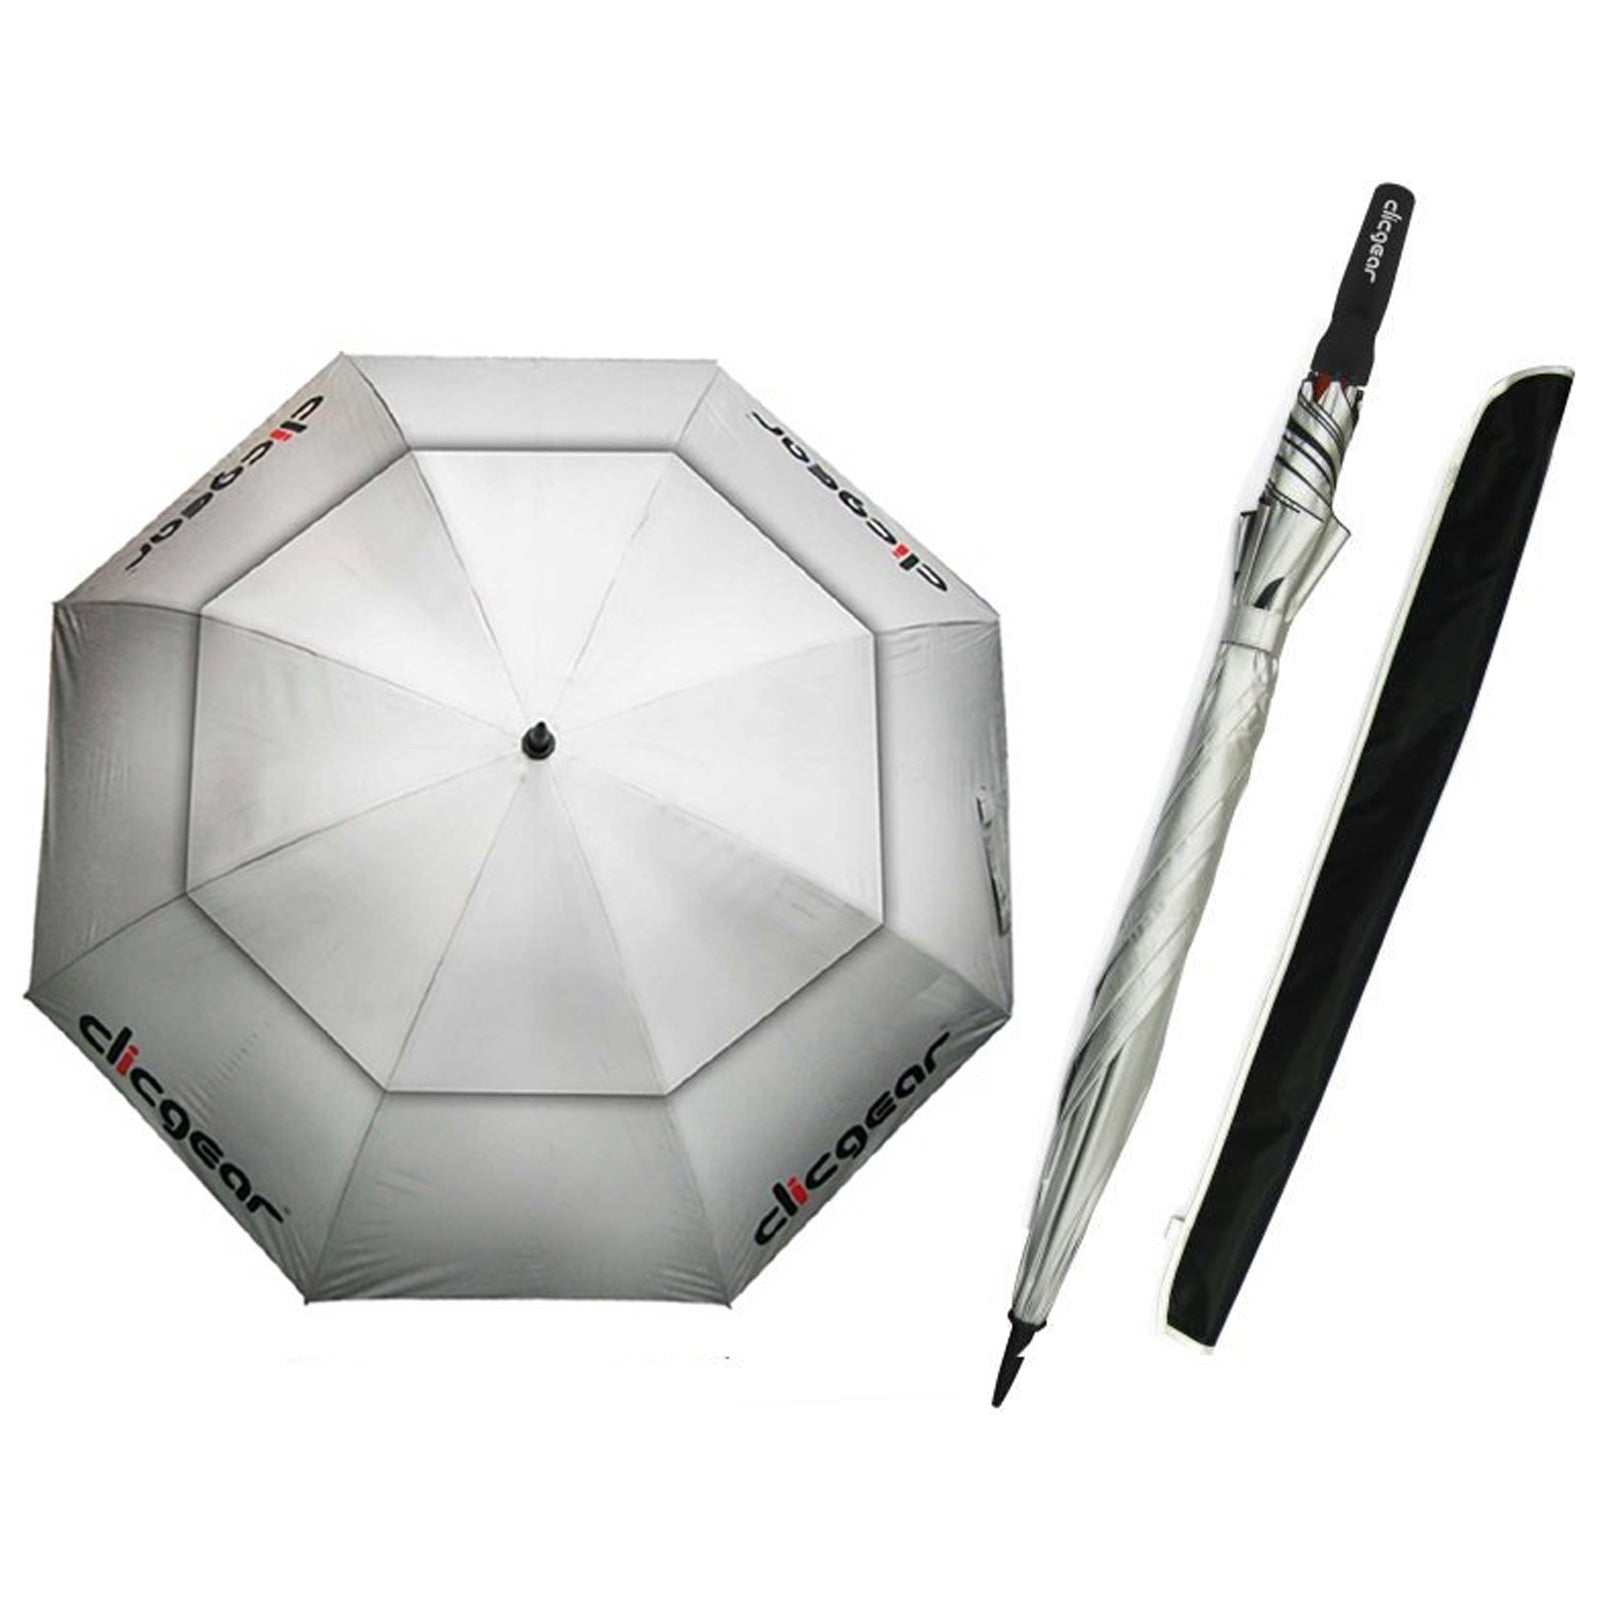 Clicgear 68" Double Canopy Umbrella